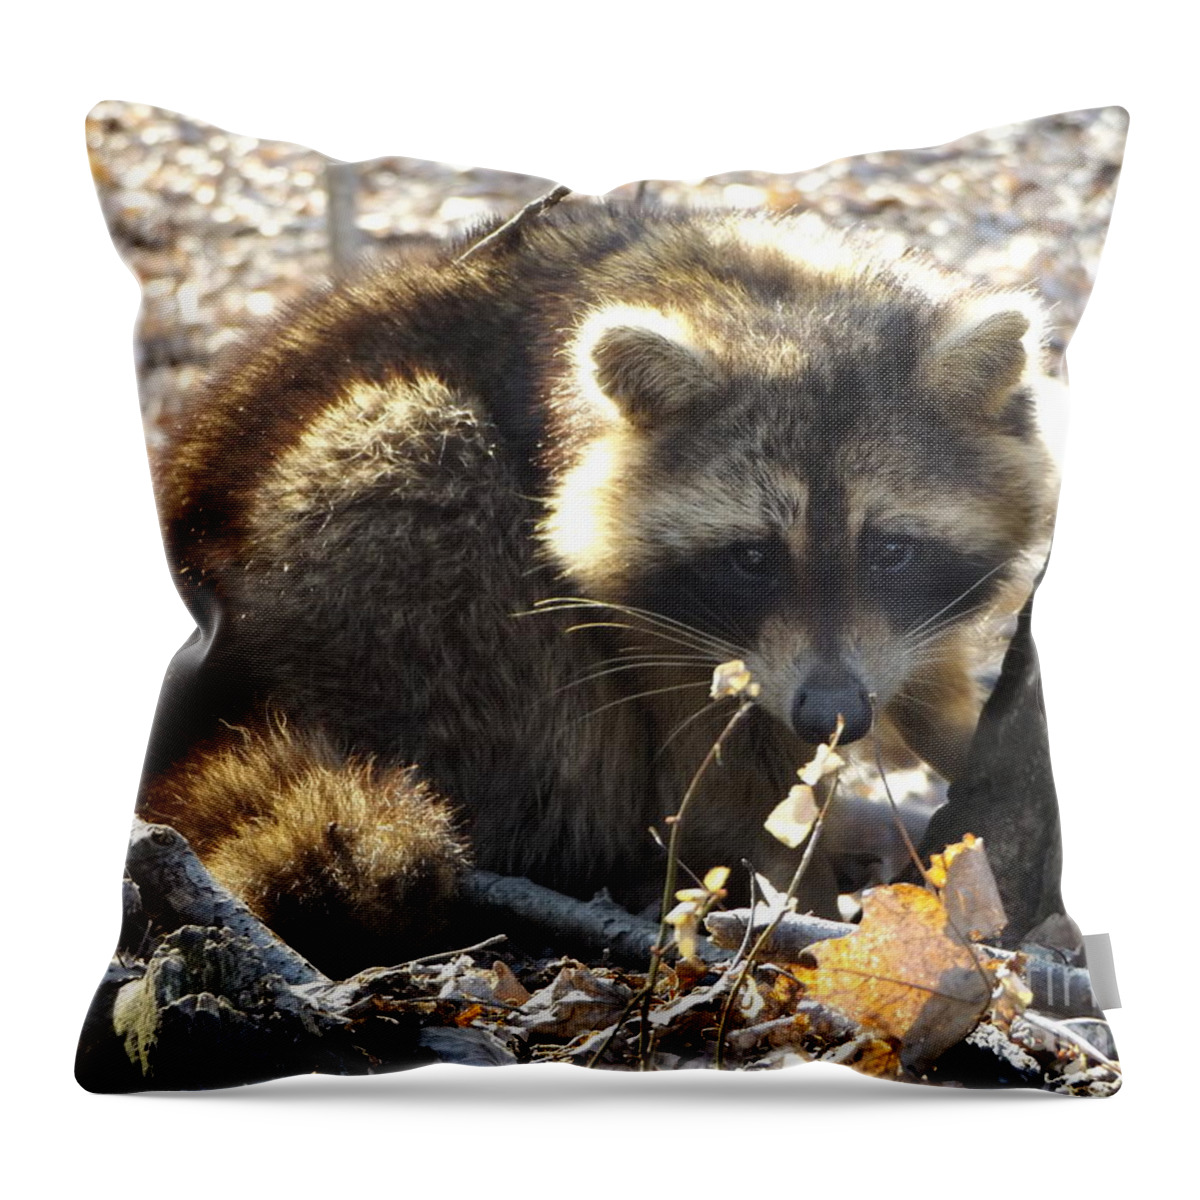 Raccoon Throw Pillow featuring the photograph Raccoon by Erick Schmidt